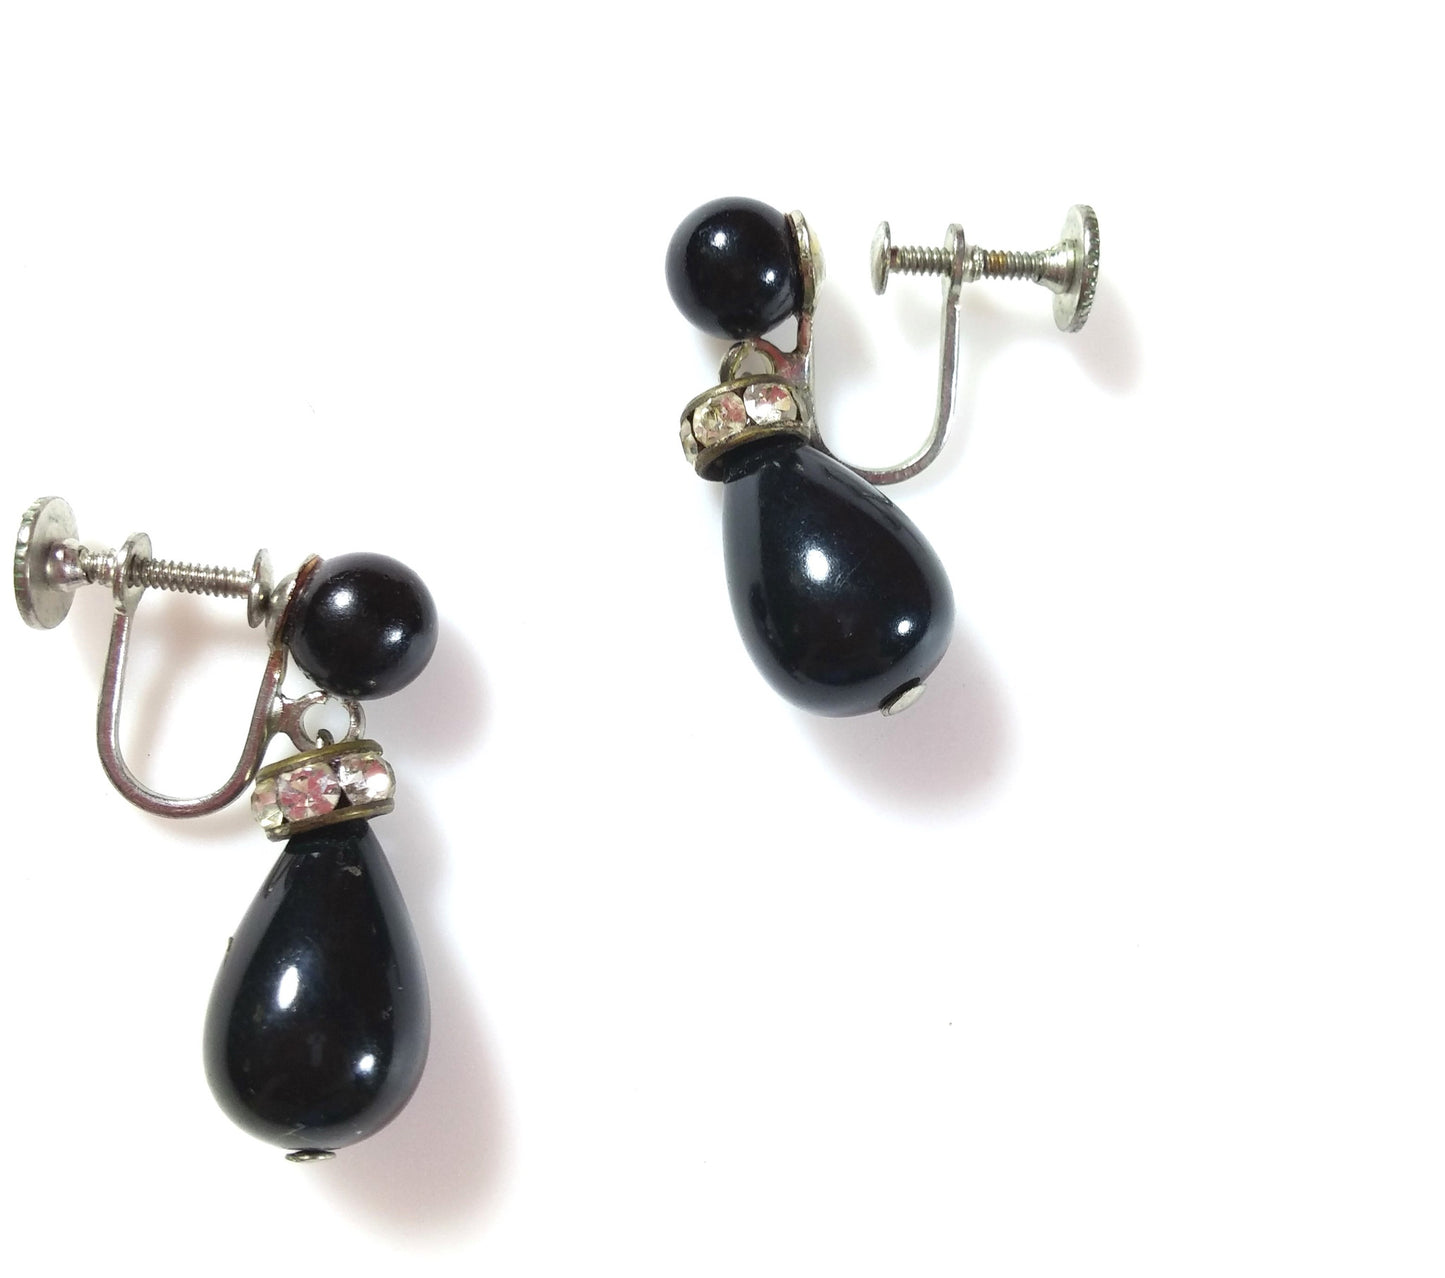 Vintage Art Deco Earrings Black Tear Drop Dangle Screw Back Rhinestone Accent - Dirty 30 Vintage | Vintage Clothing, Vintage Jewelry, Vintage Accessories